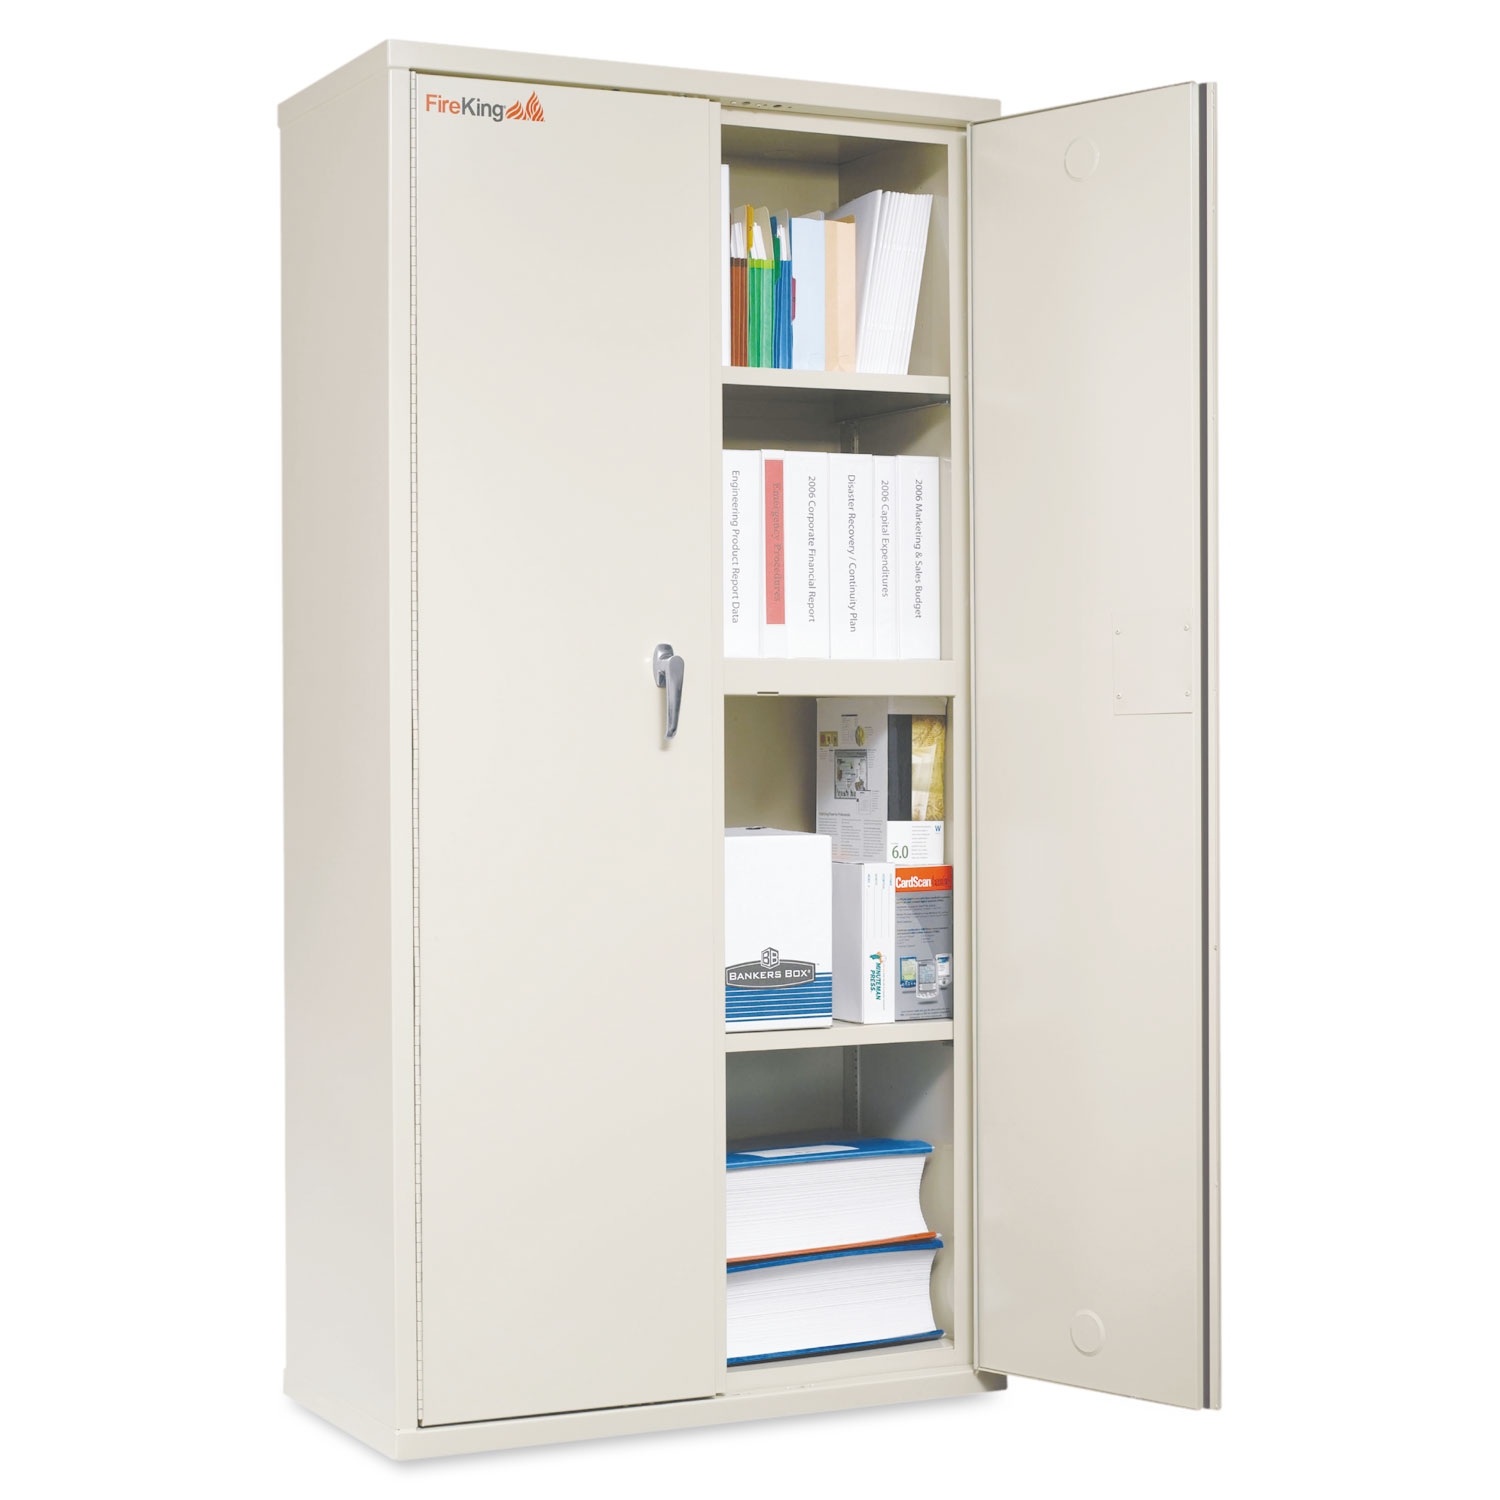  FireKing CF7236-D Storage Cabinet, 36w x 19 1/4d x 72h, UL Listed 350°, Parchment (FIRCF7236D) 